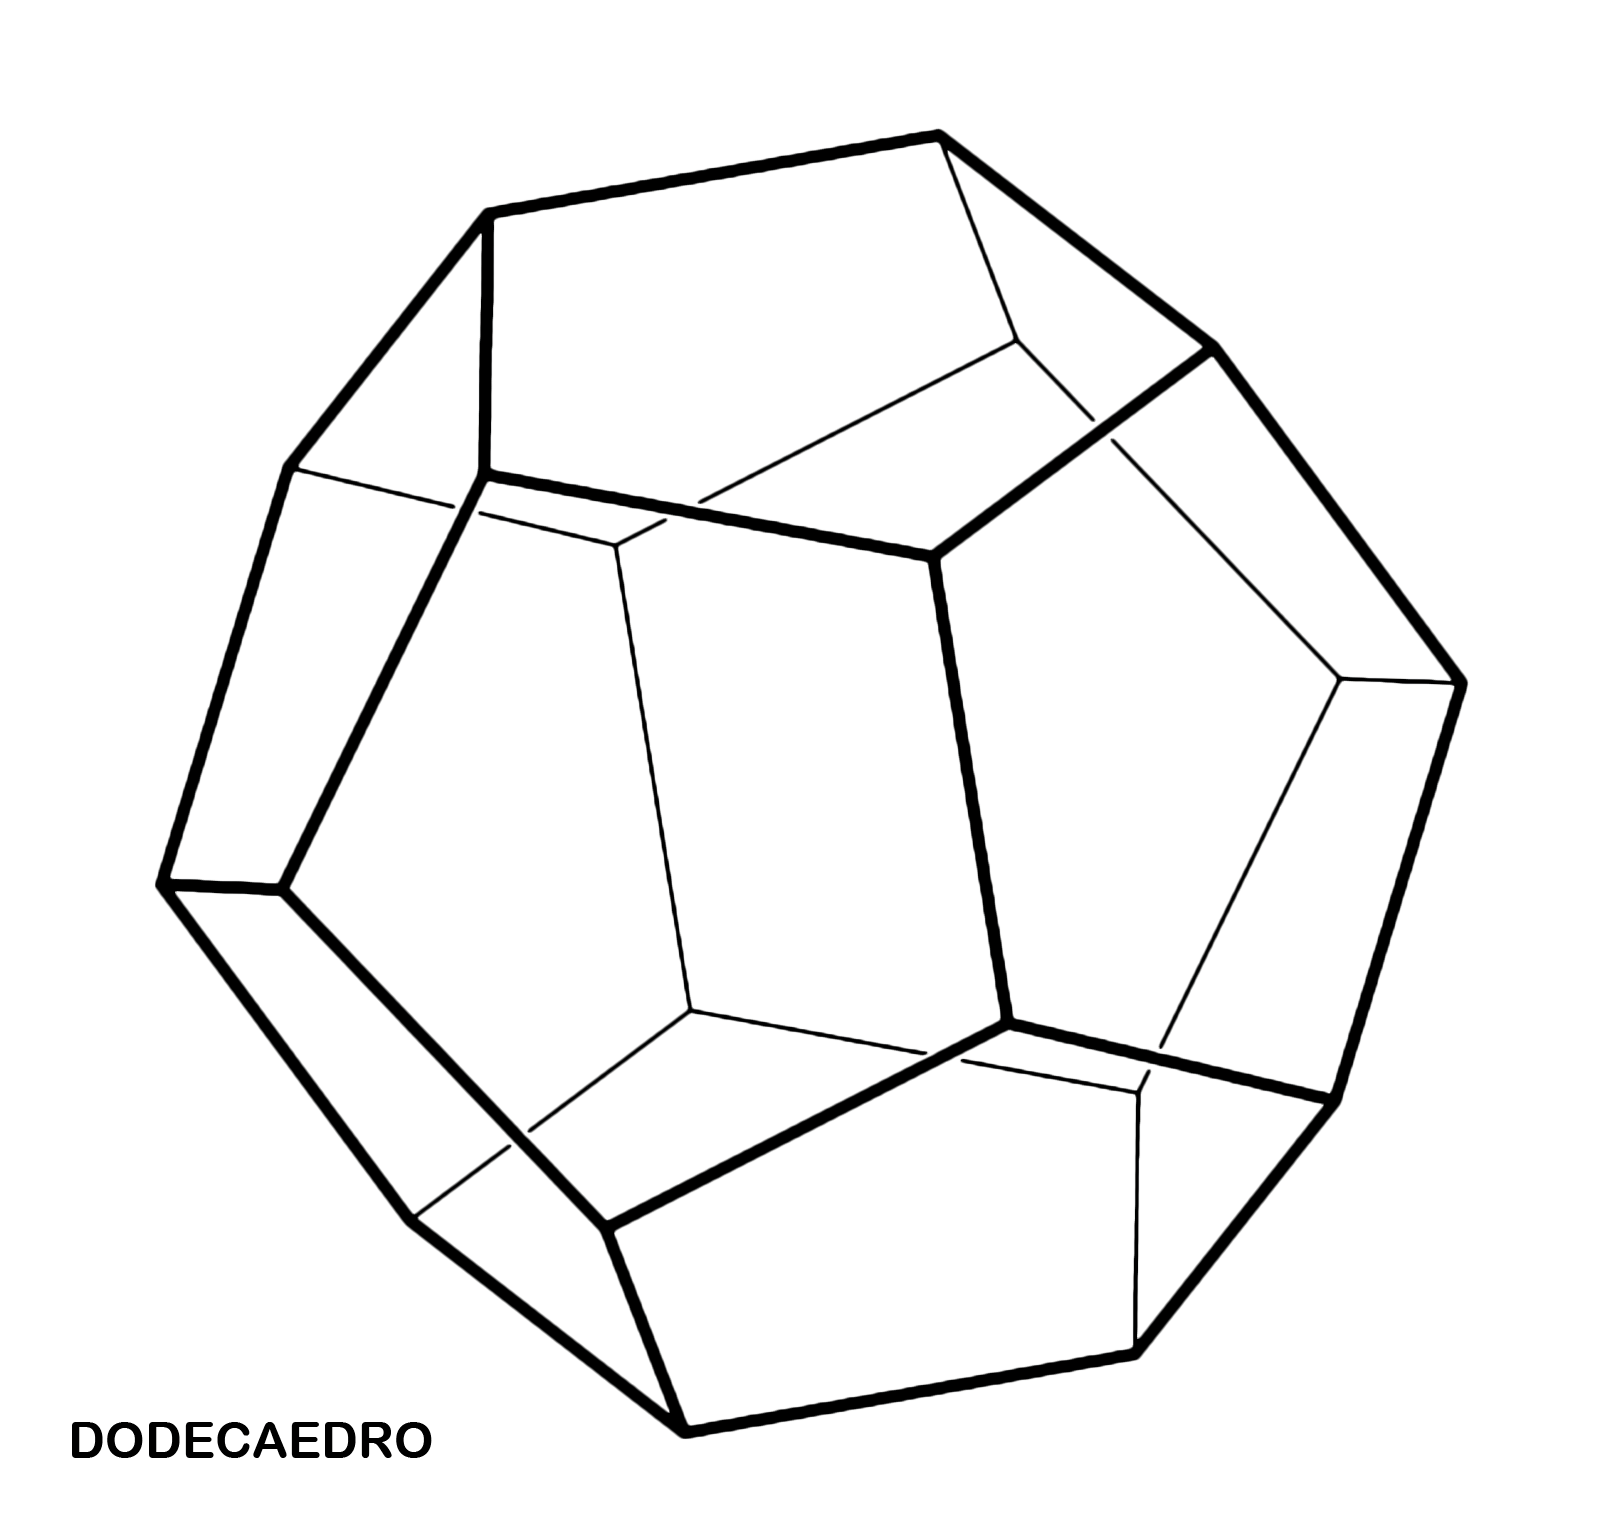 Figure geometriche - Figura geometrica solida - Dodecaedro